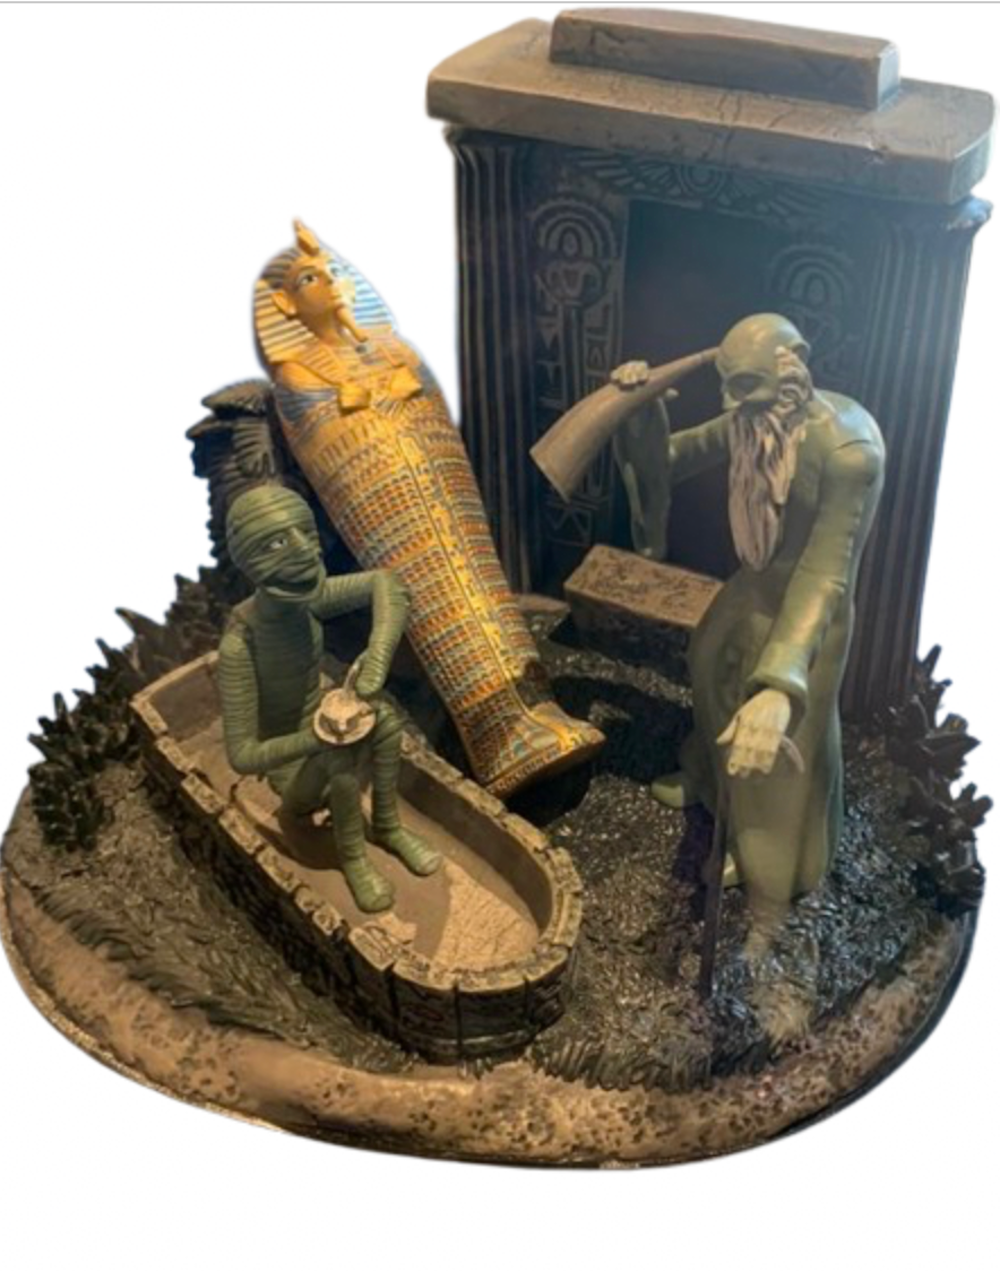 Disney Parks Haunted Mansion Mummy Musical Grim Grinning Ghosts Figurine New Box